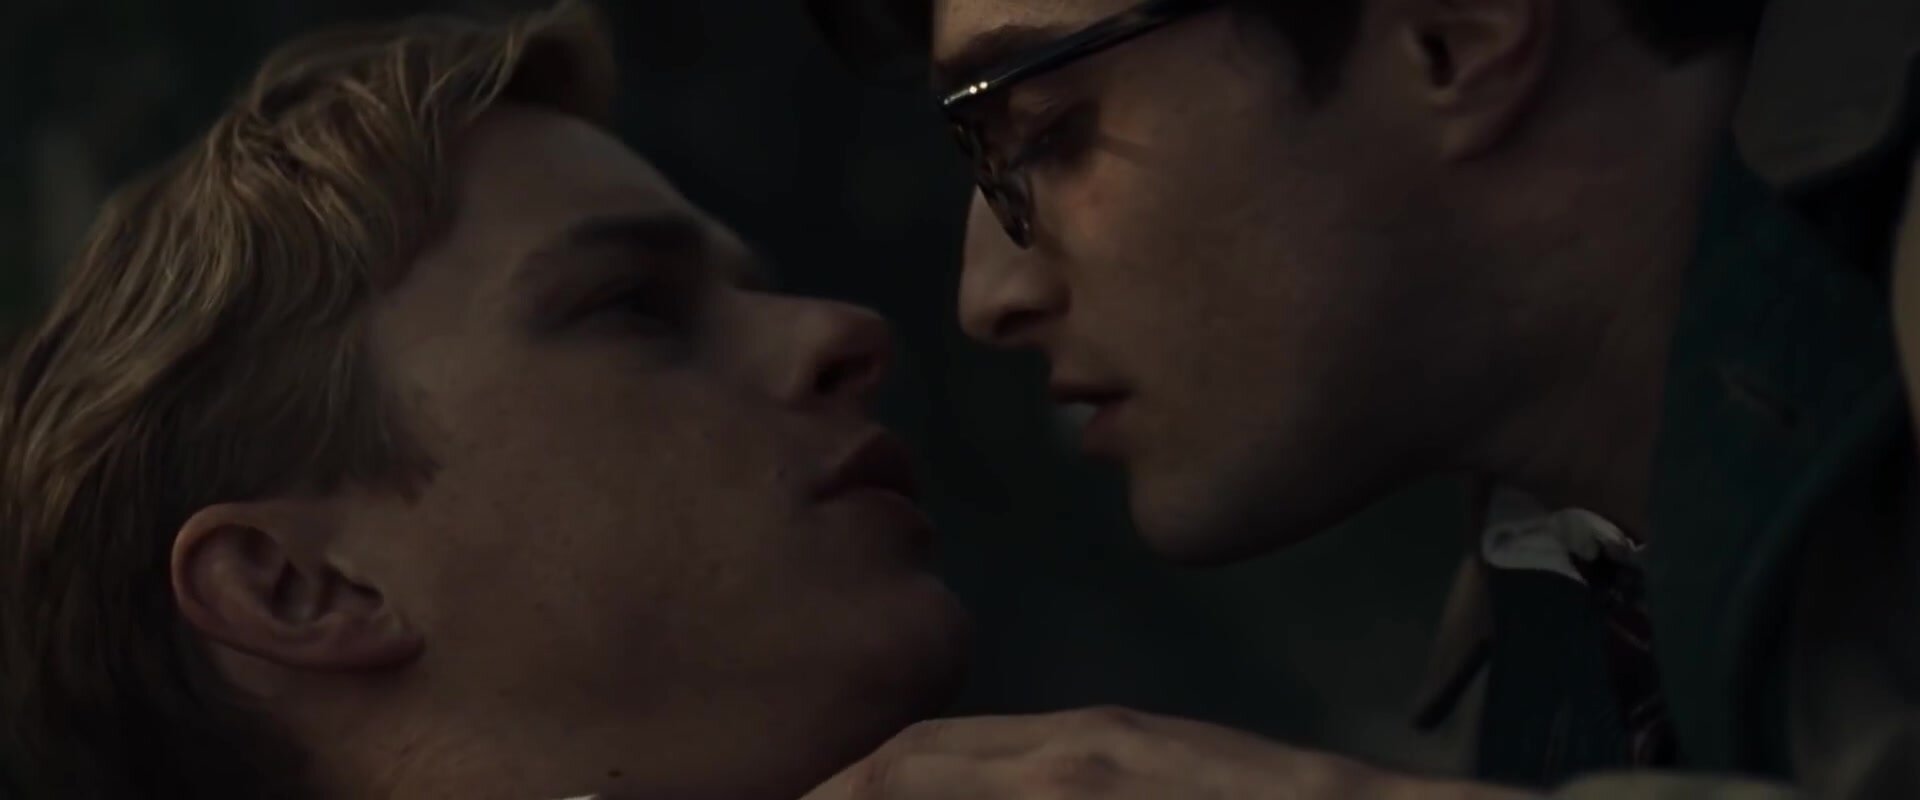 Daniel Radcliffe Gay Kiss